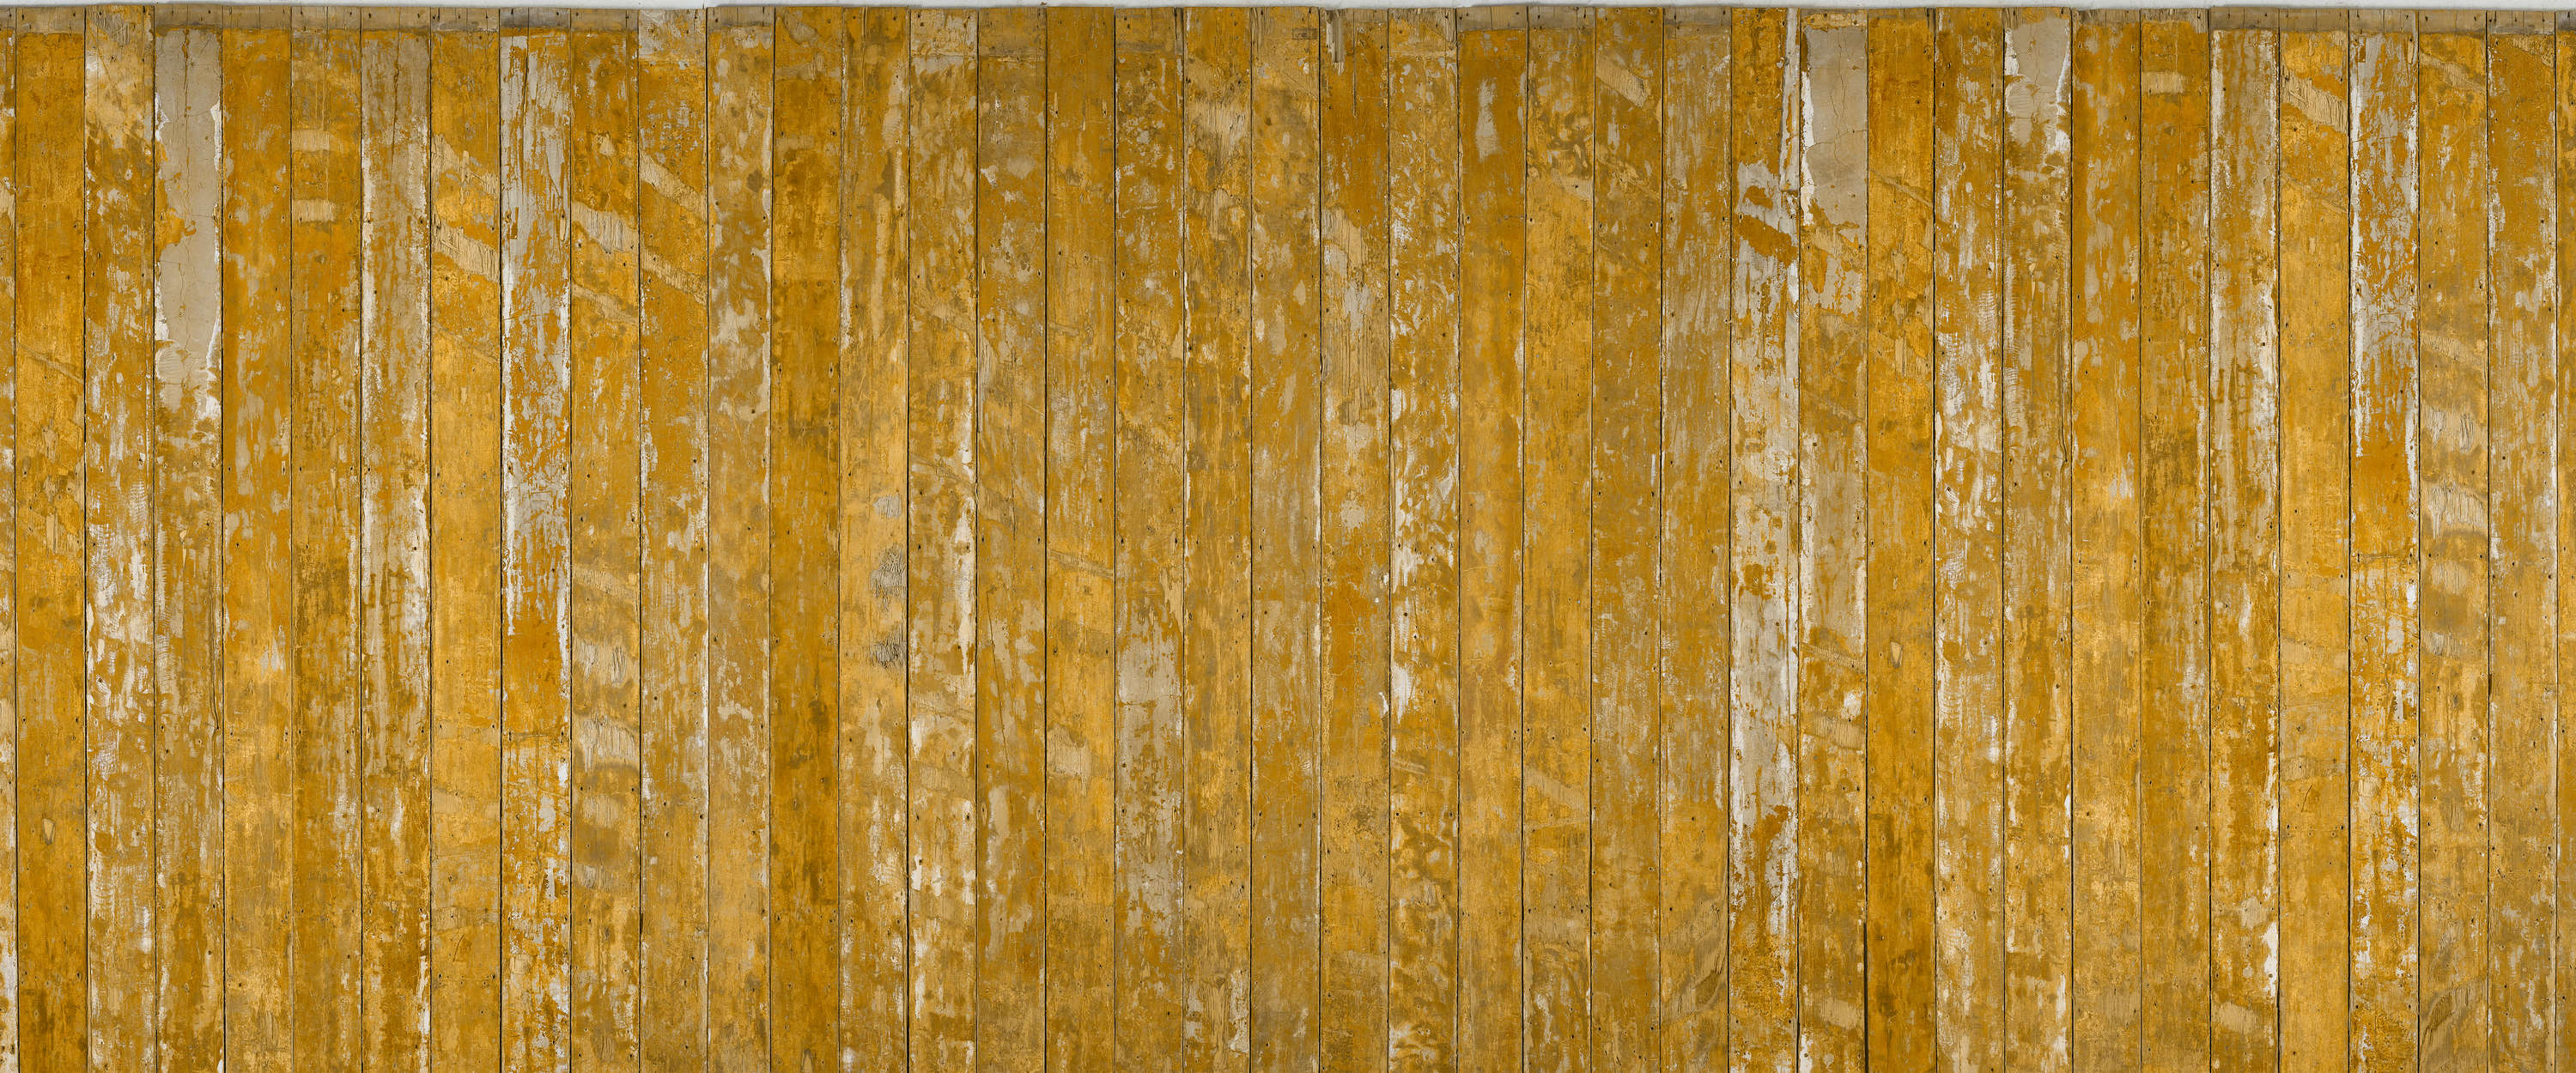             Photo wallpaper wood planks yellow wood optics in used look
        